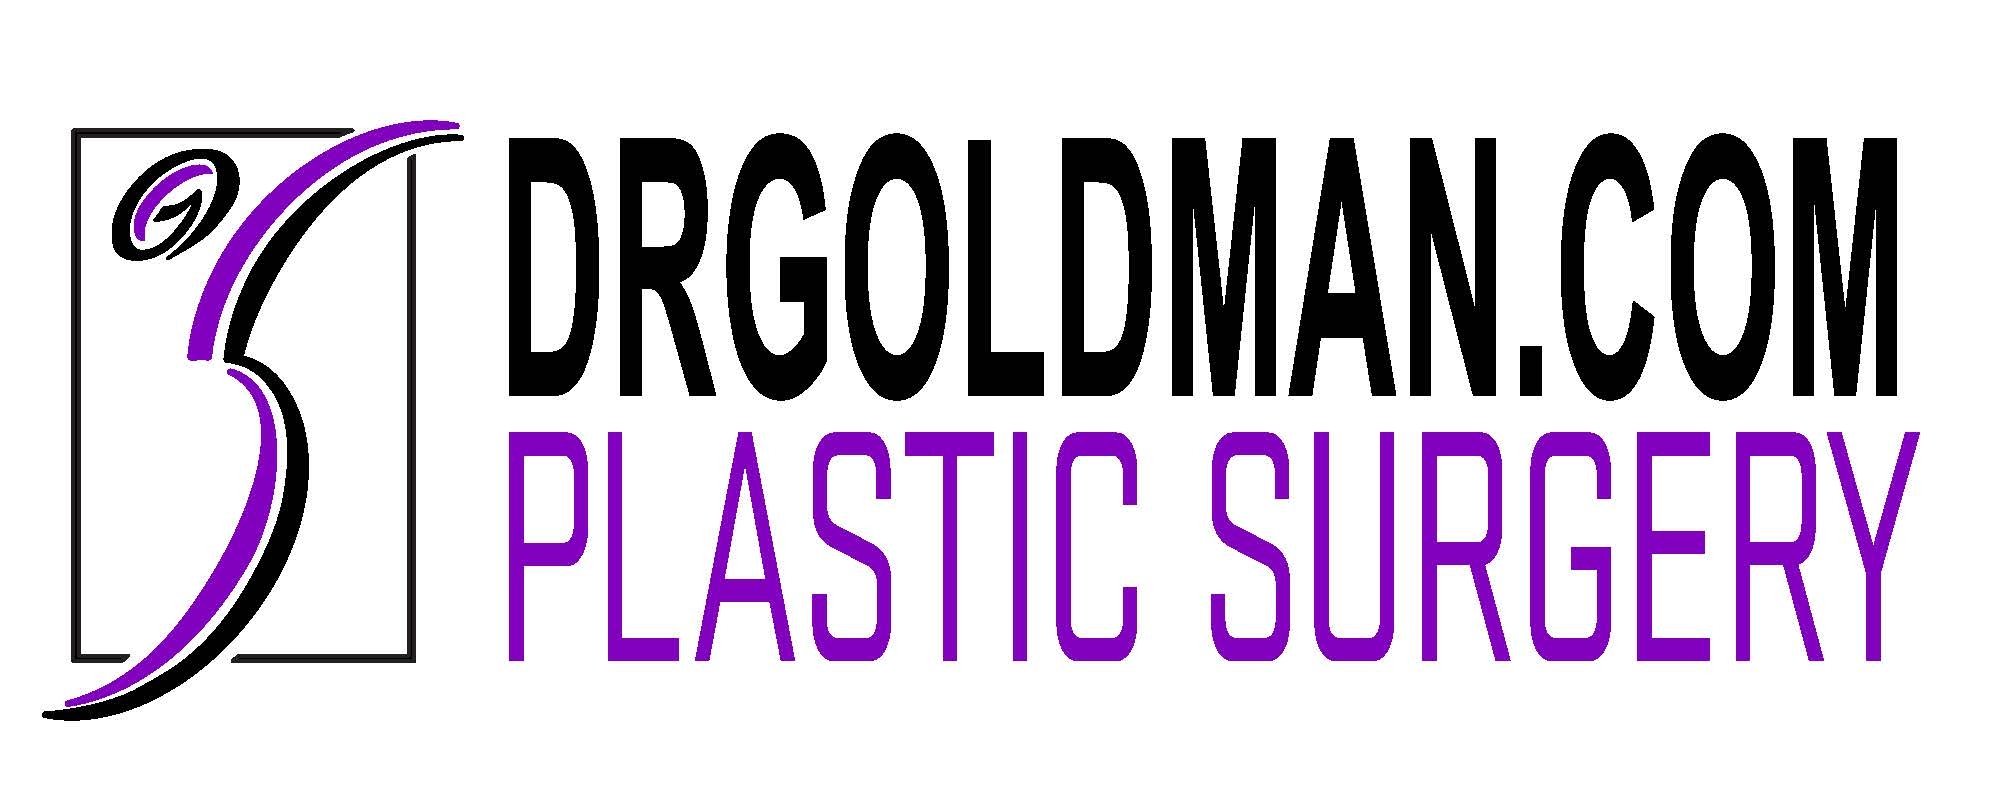 goldman beachwood plastic